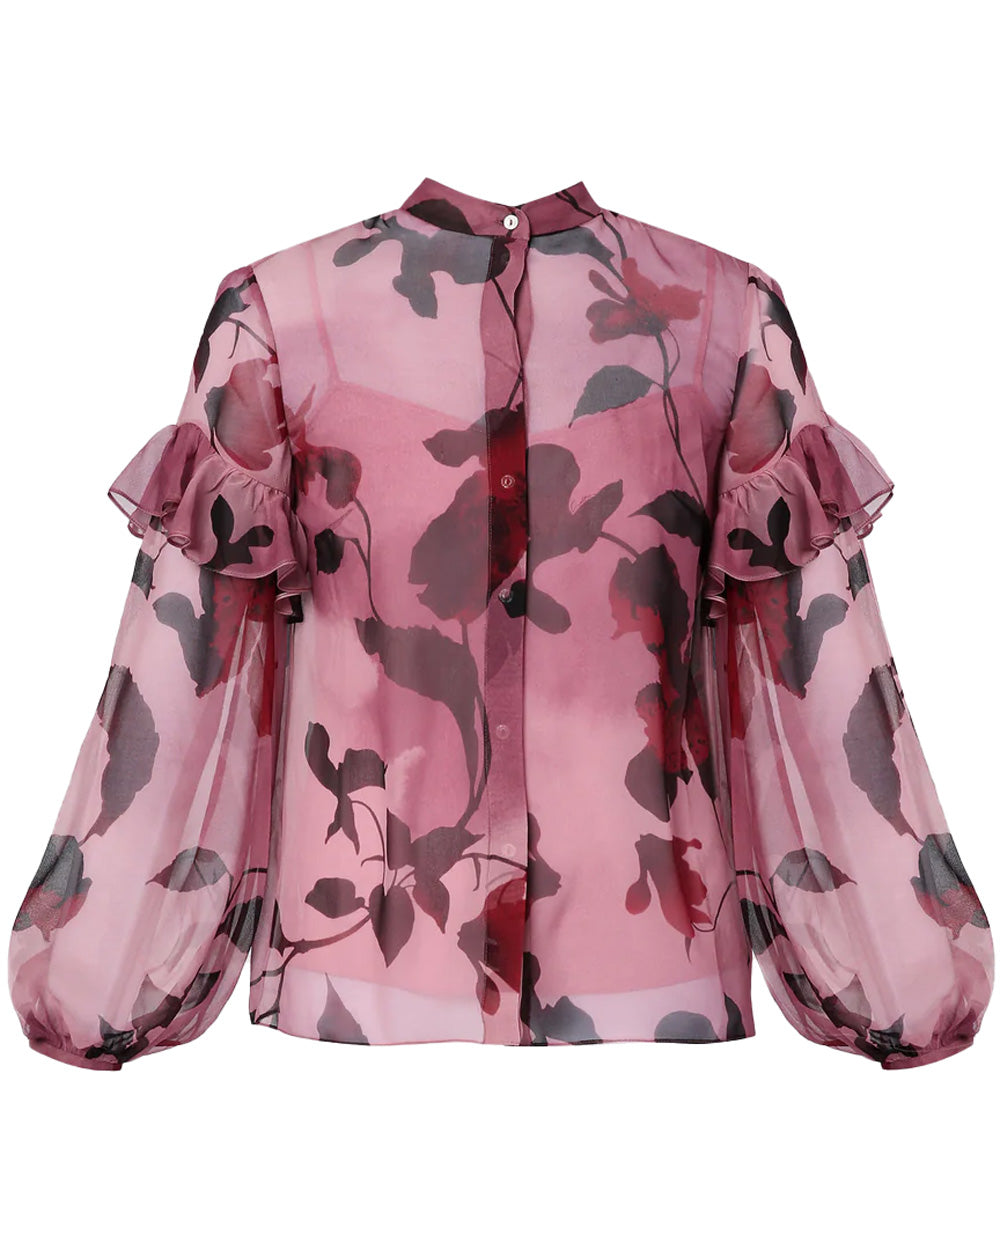 Pink Evelyn floral-print ruffled silk gown, Erdem